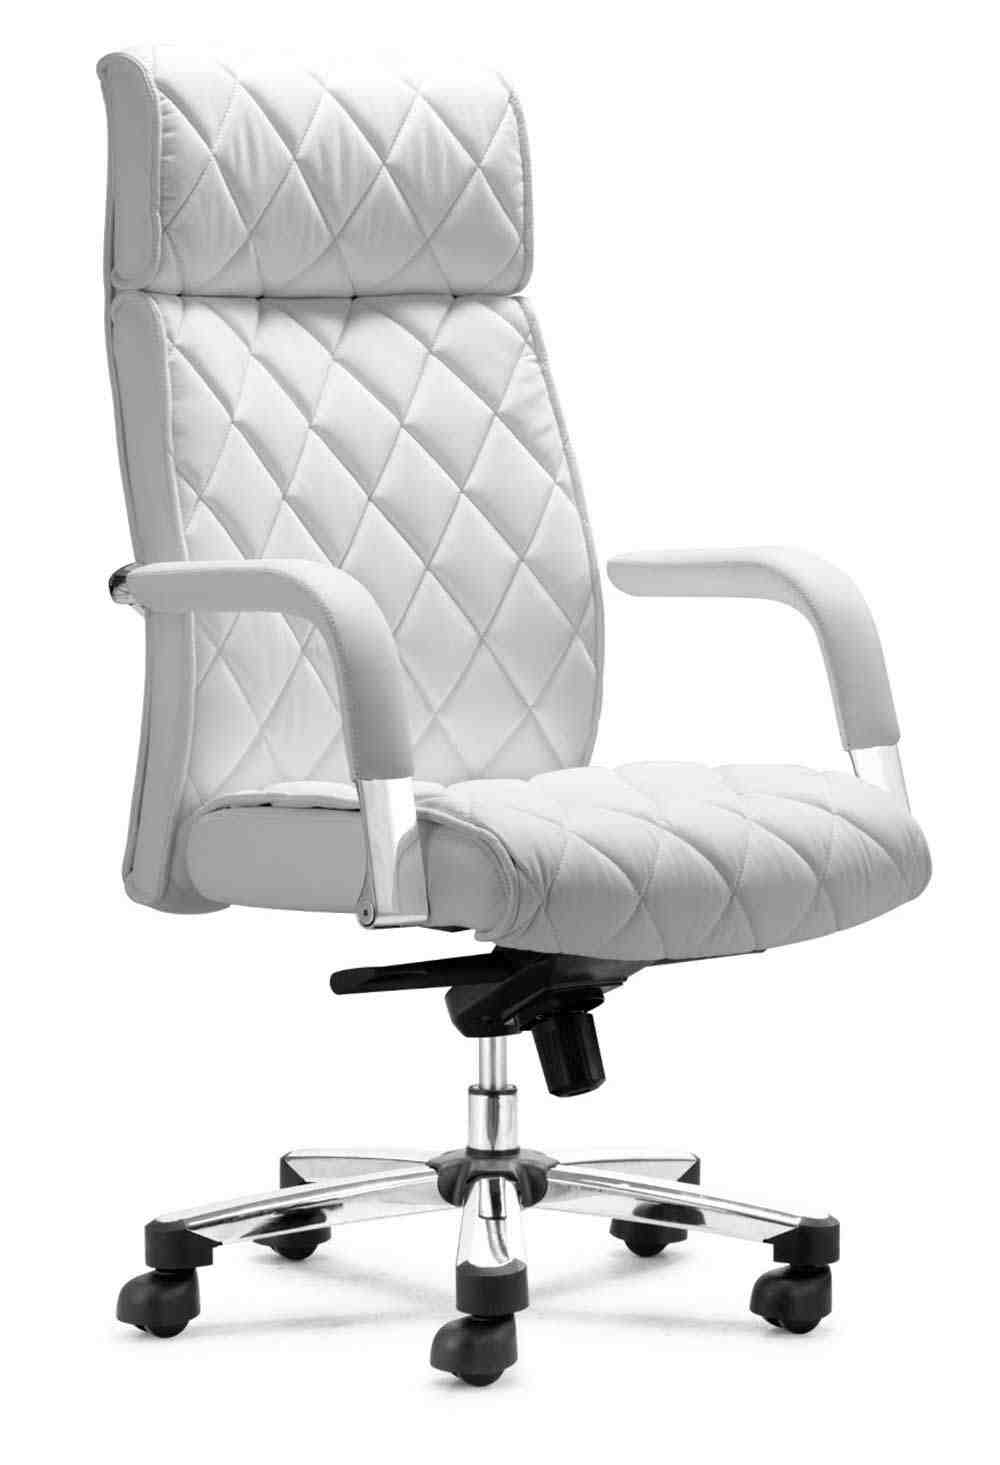 Modern White Leather Office Chair - Decor Ideas